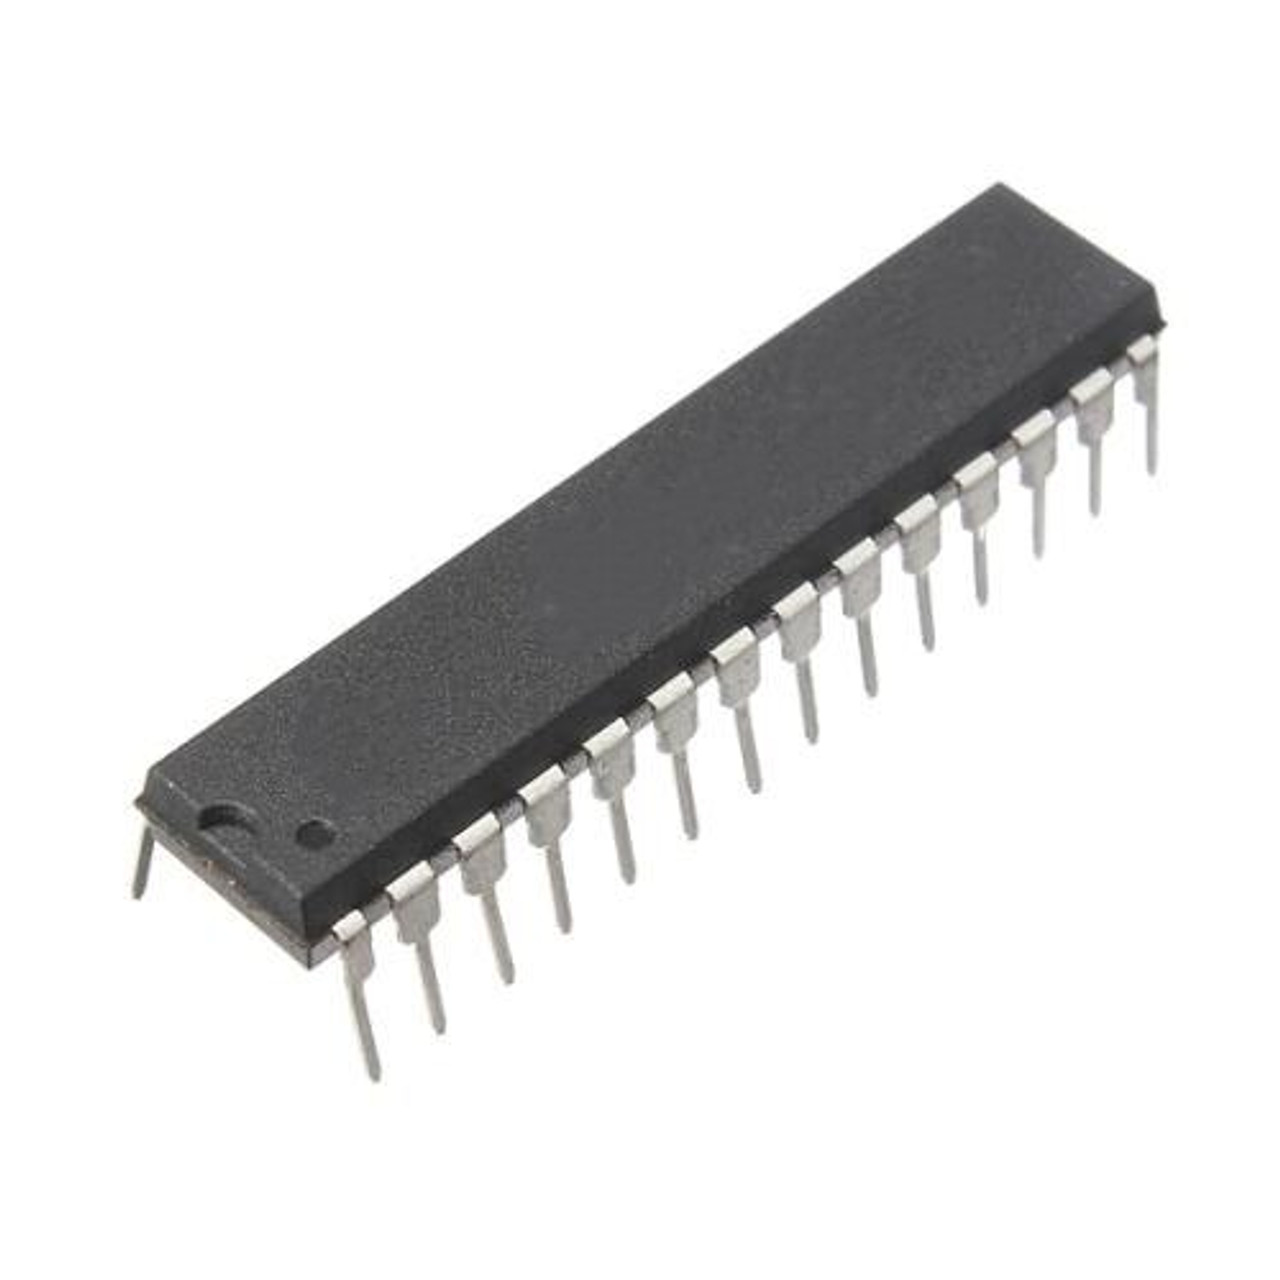 PIC18F2525-I/SP ; Enhanced Flash Microcontroller, DIP-28